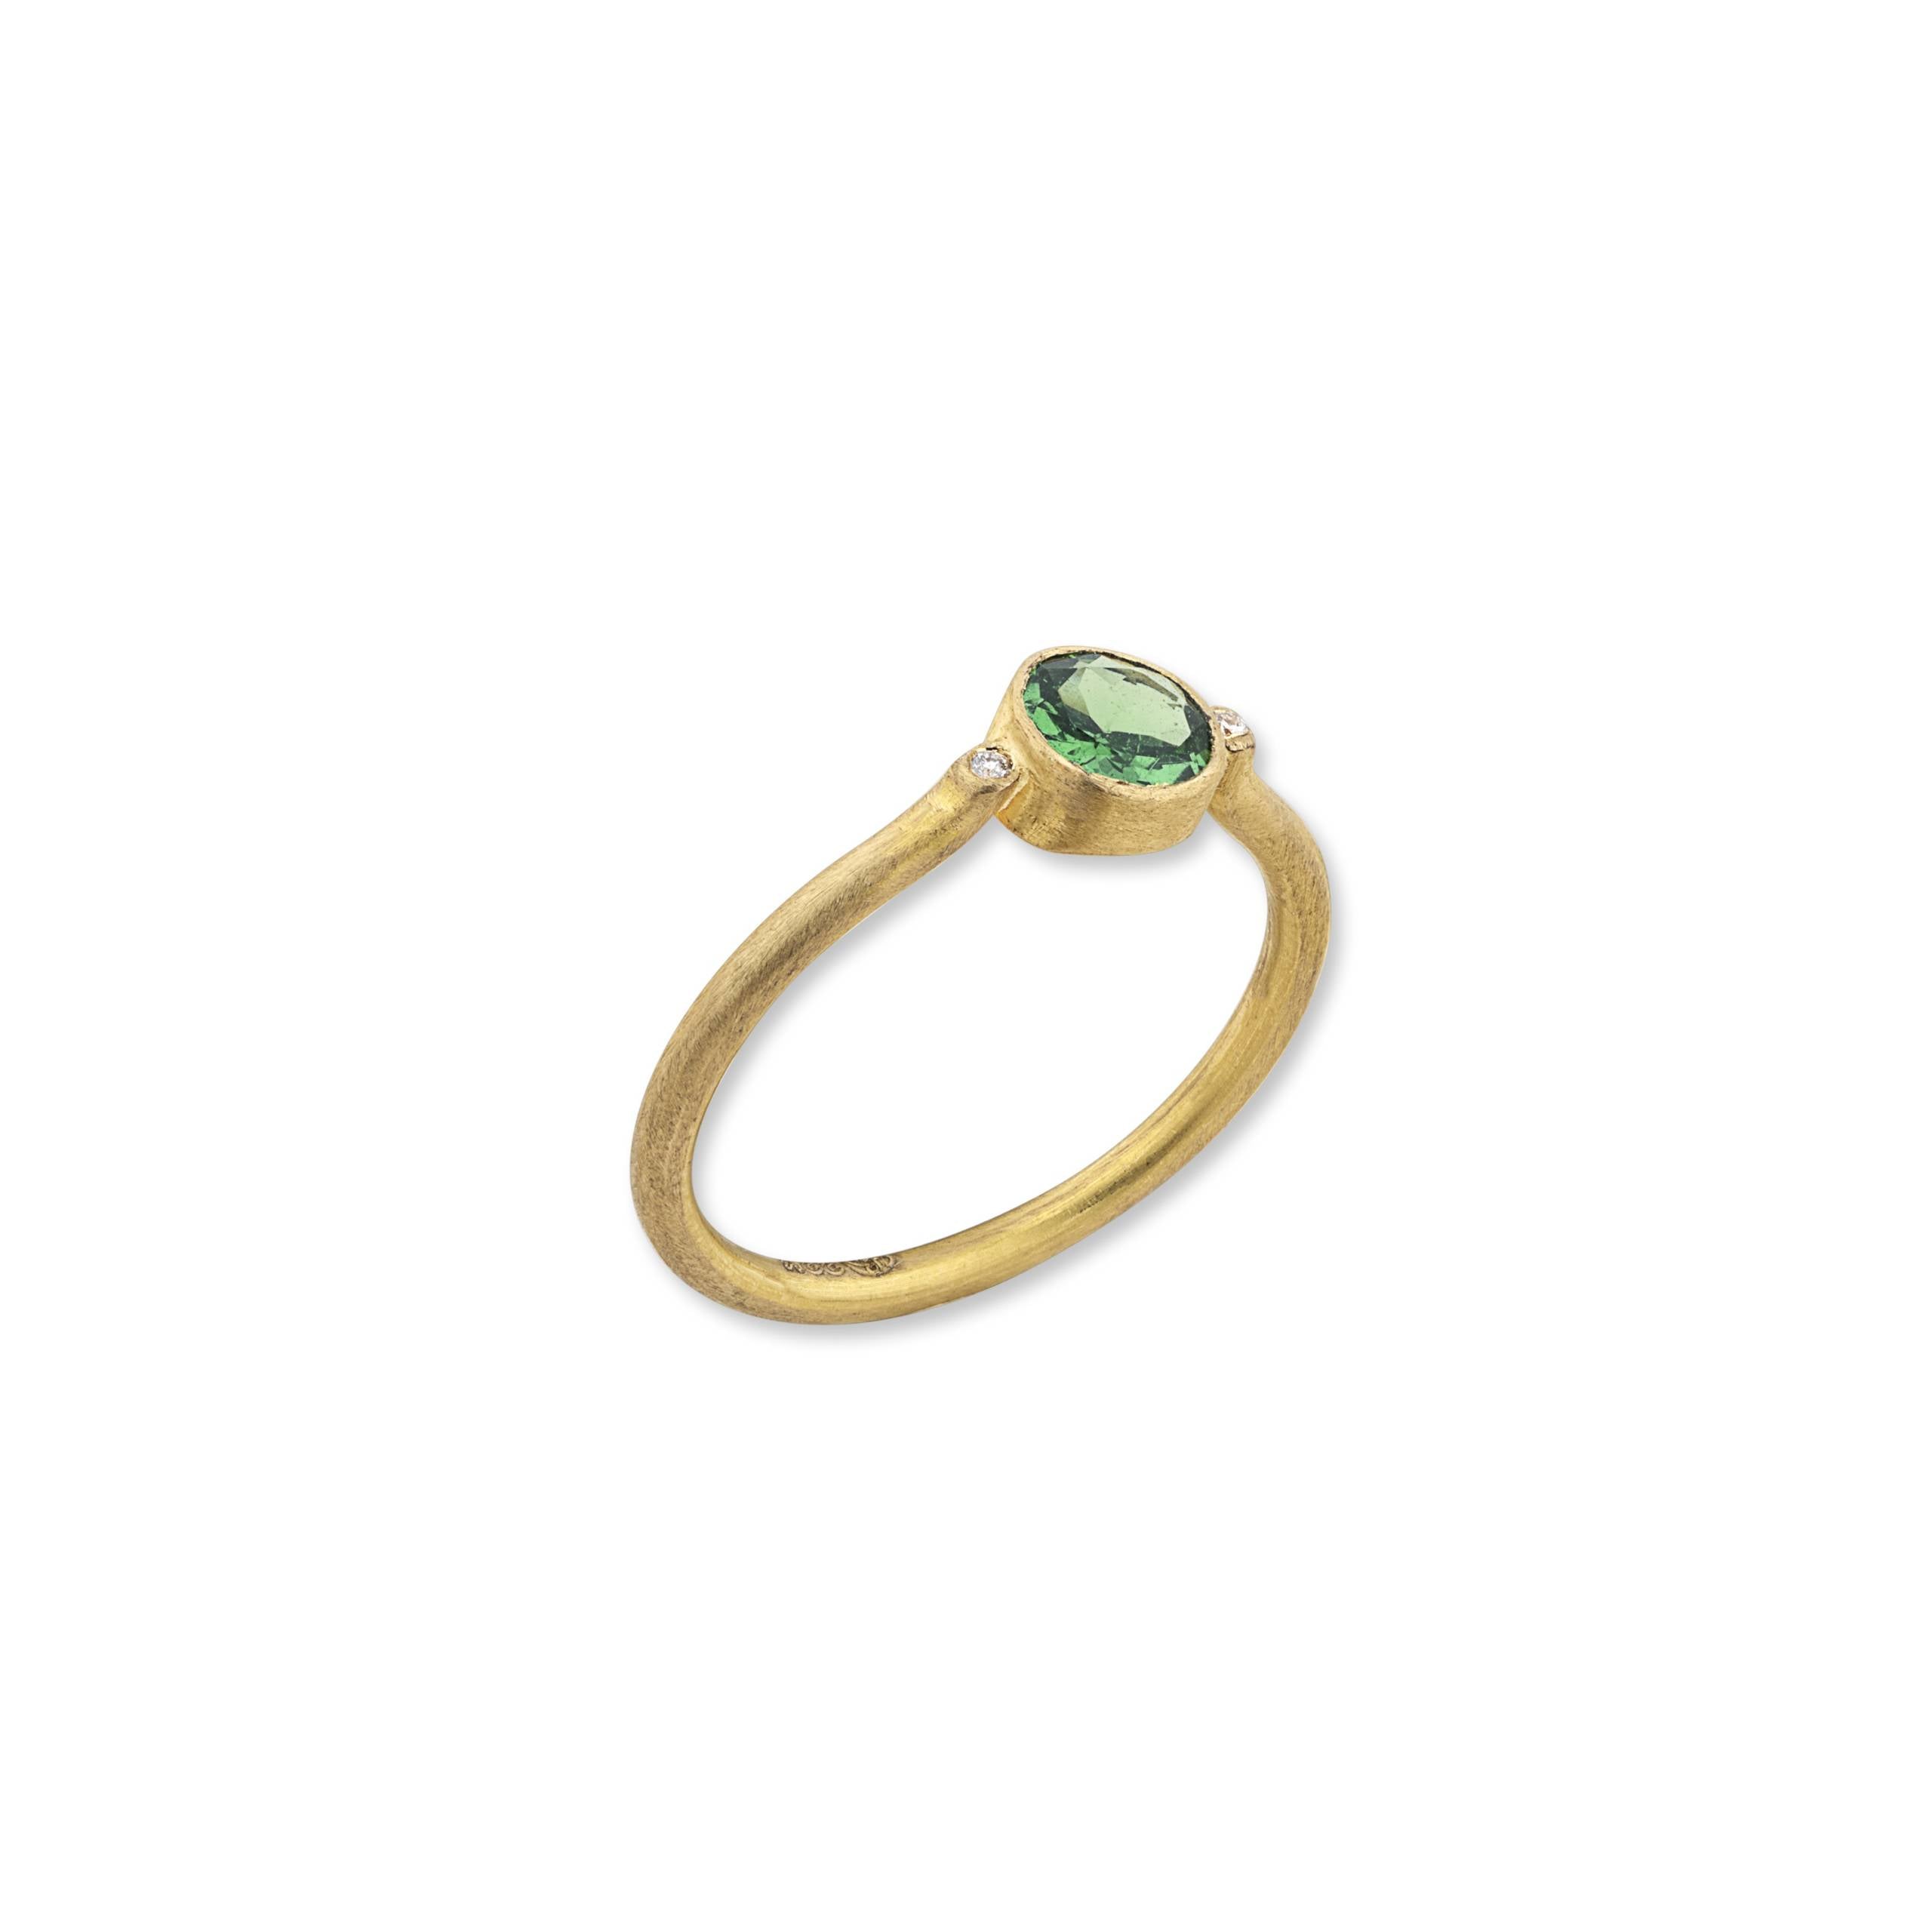 22K Gold Engagement, Wedding, Anniversary Gold Jewelry Man Women Couple Ring  20 | eBay